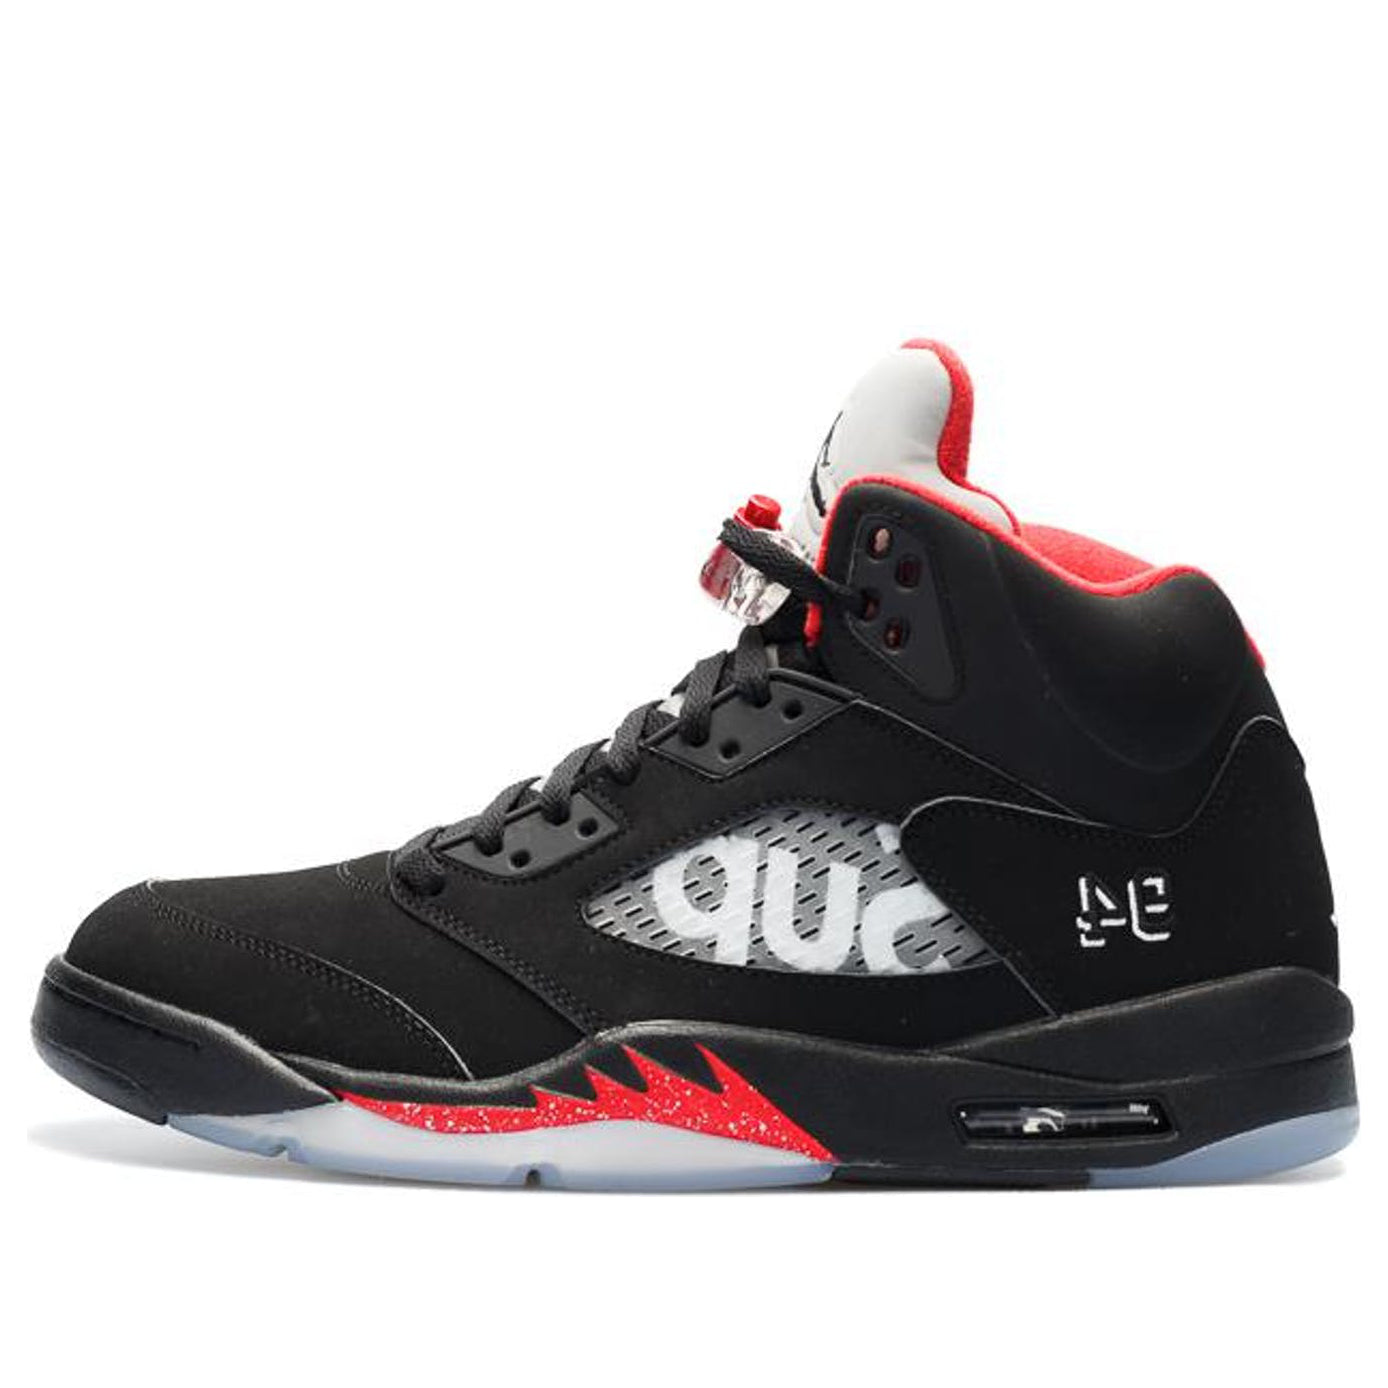 Nike Supreme x Air Jordan 5 Retro 'Black' Black/Fire Red 824371-001